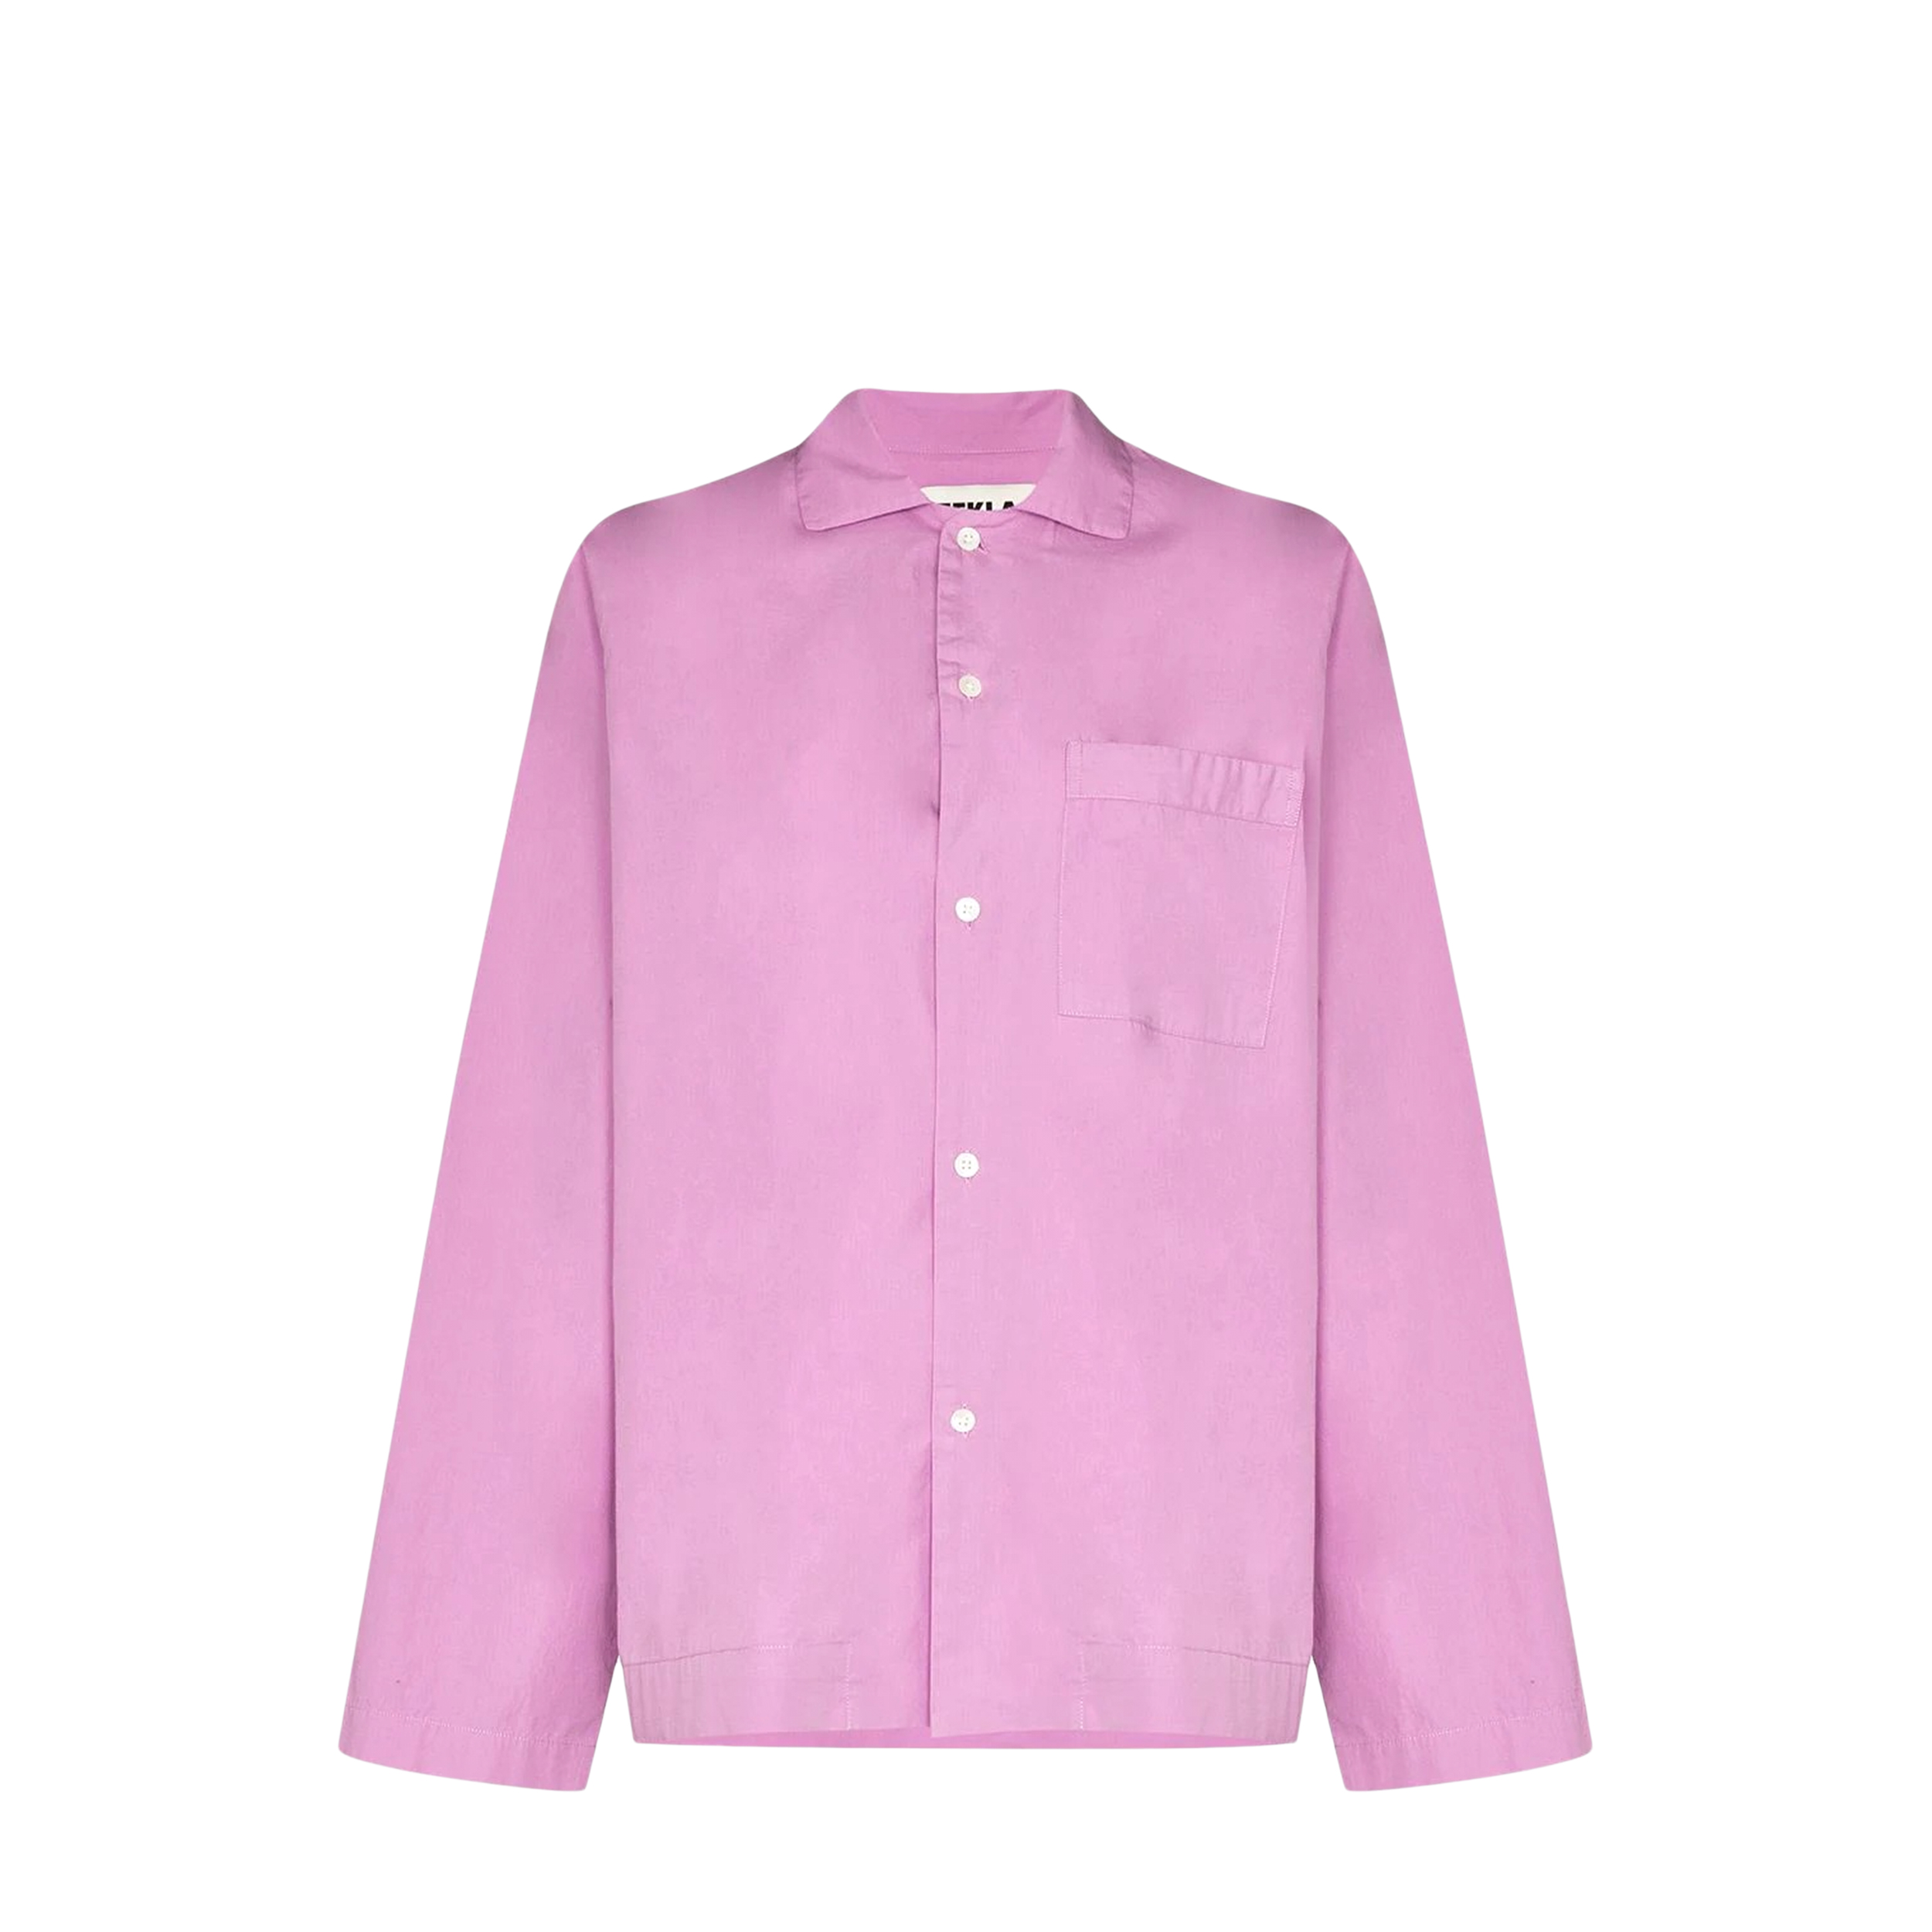 Tekla Tekla Poplin Pyjamas Shirt Pink (L) SWT-PP Poplin Pyjamas Shirt Pink (L) - фото 1